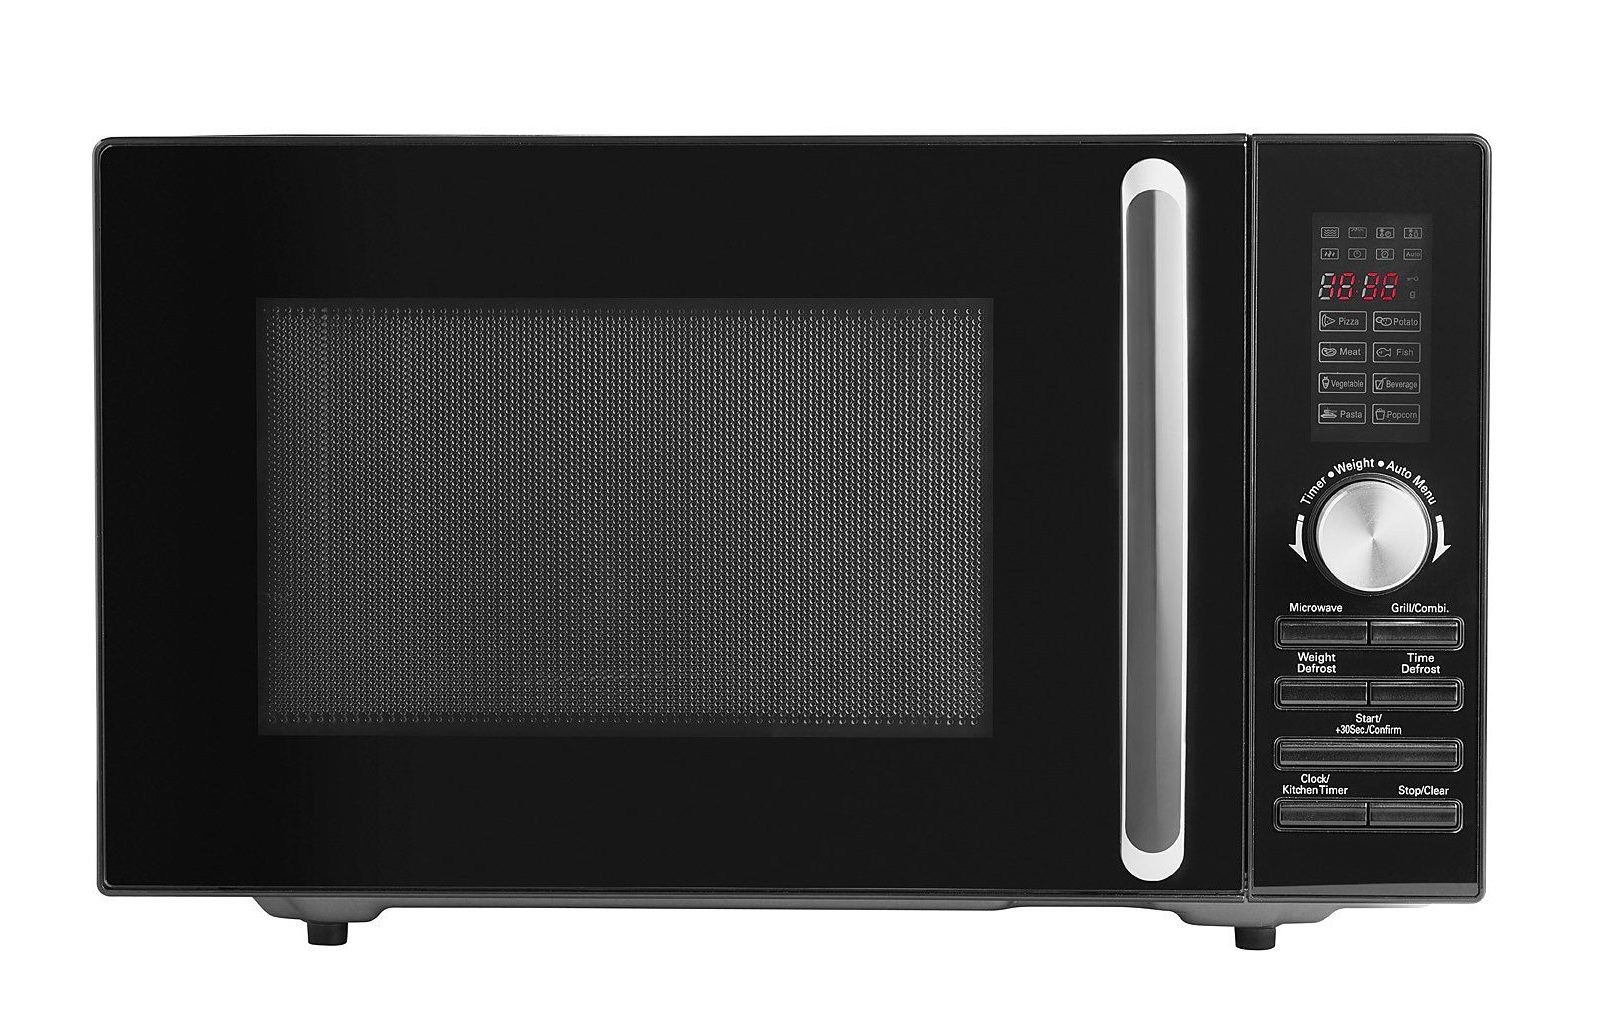 Digital Black Microwave Asda and Grill